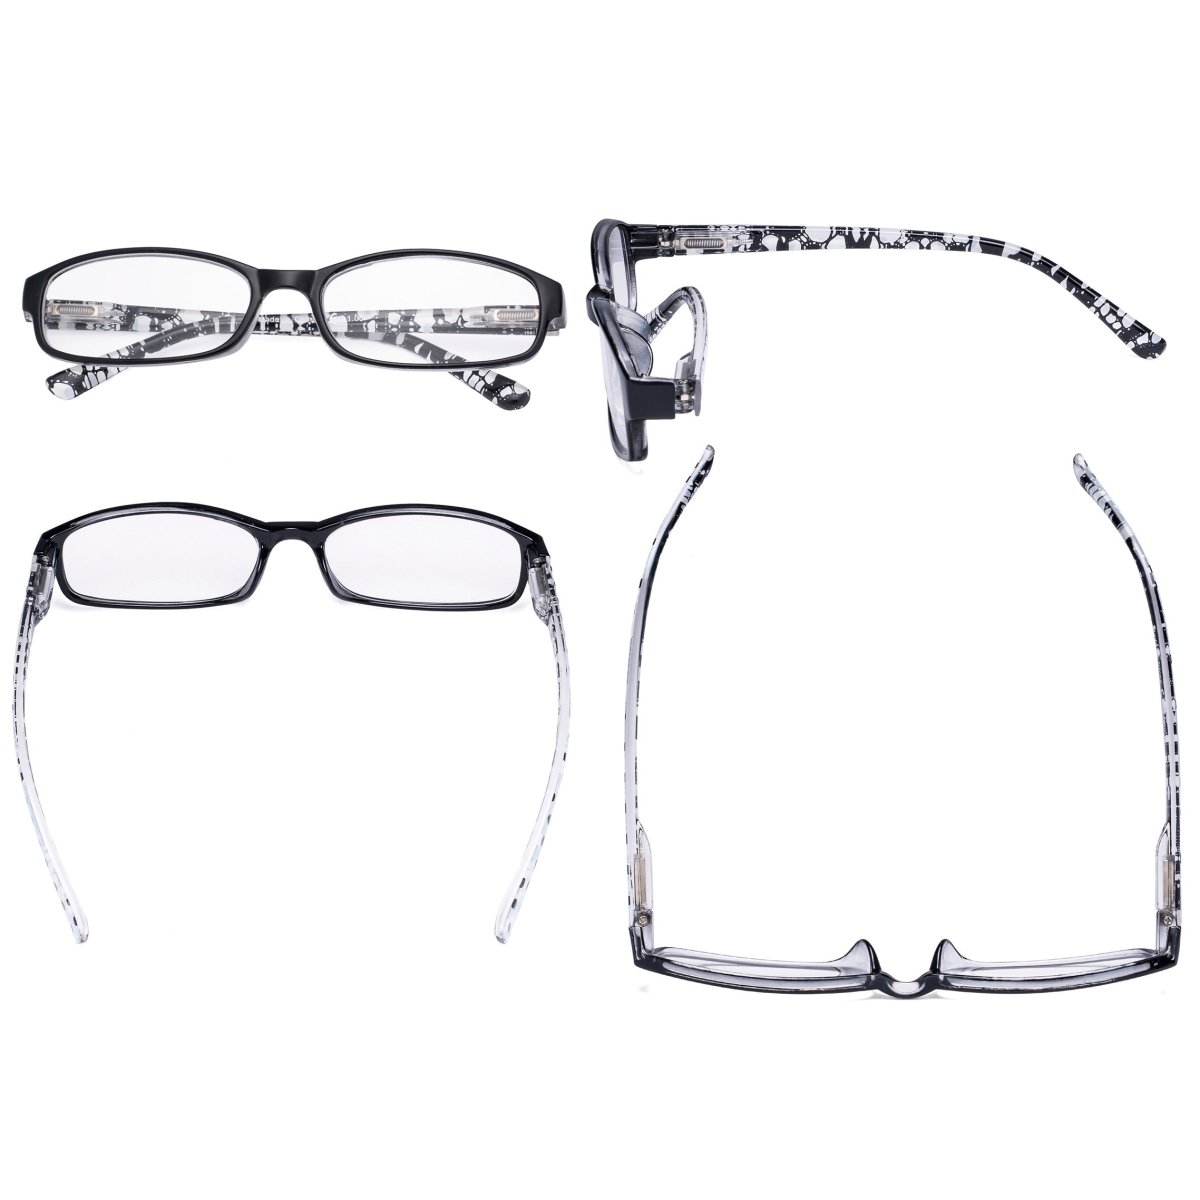 5 Pack Cute Reading Glasses Women R908Peyekeeper.com